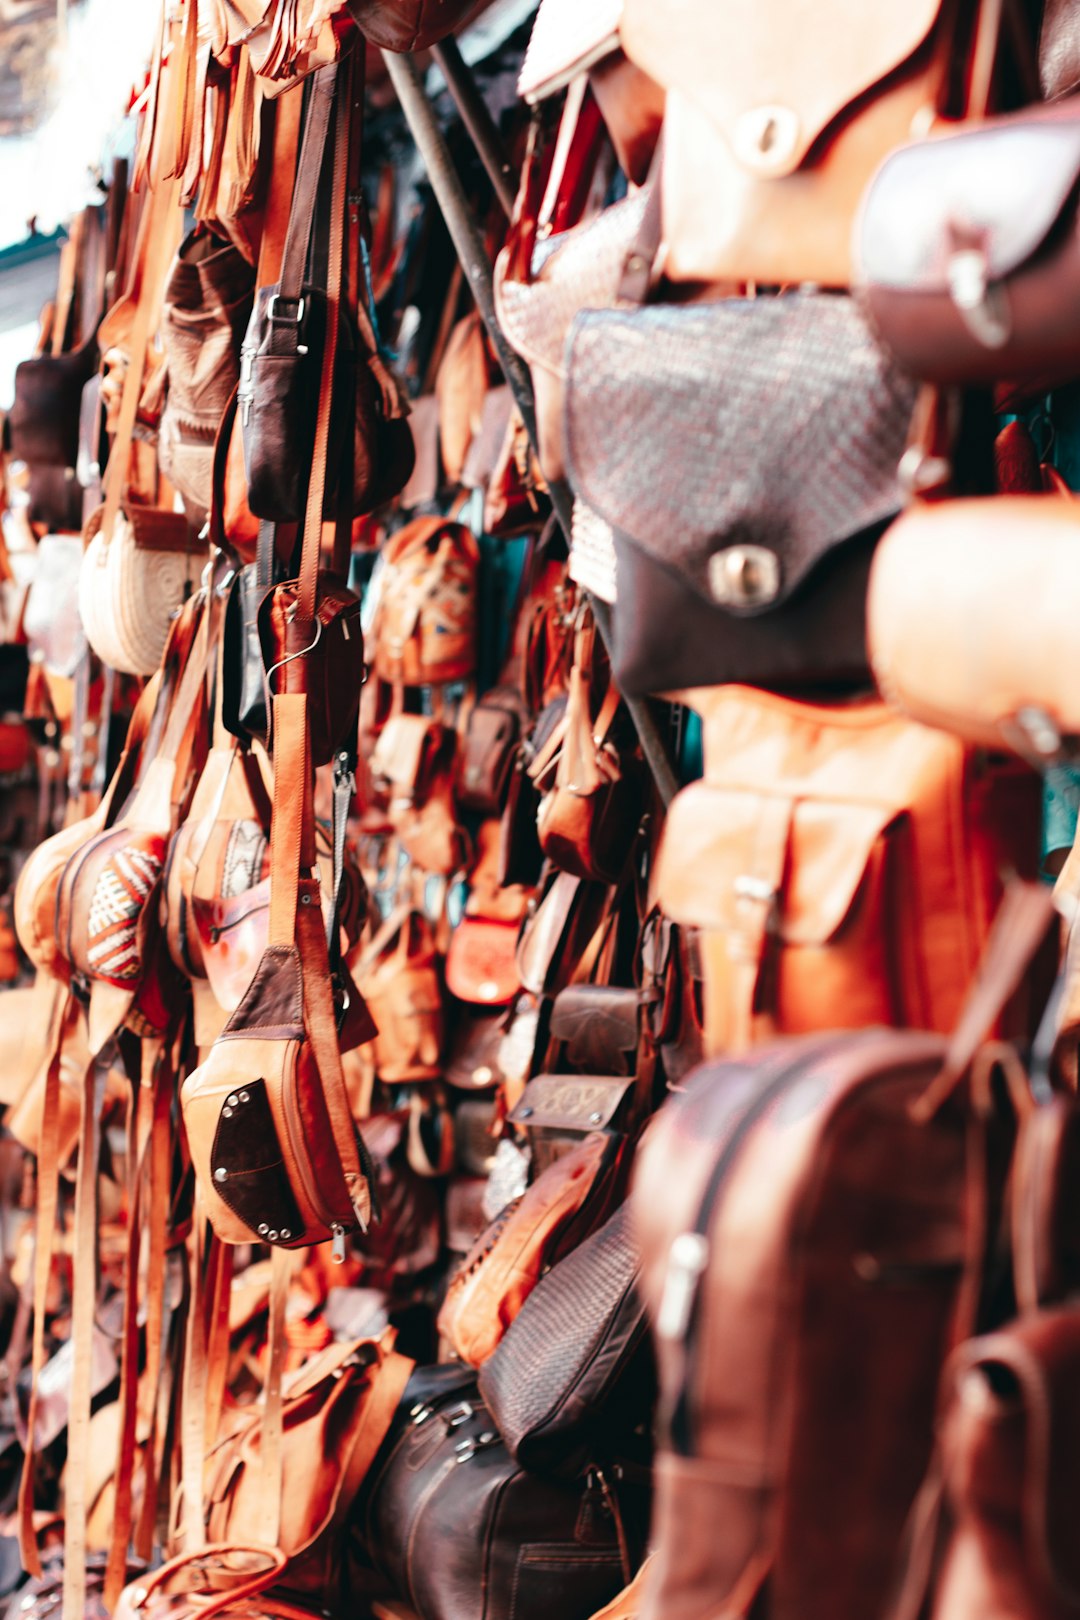 brown leather shoulder bags hanged on brown wooden rack